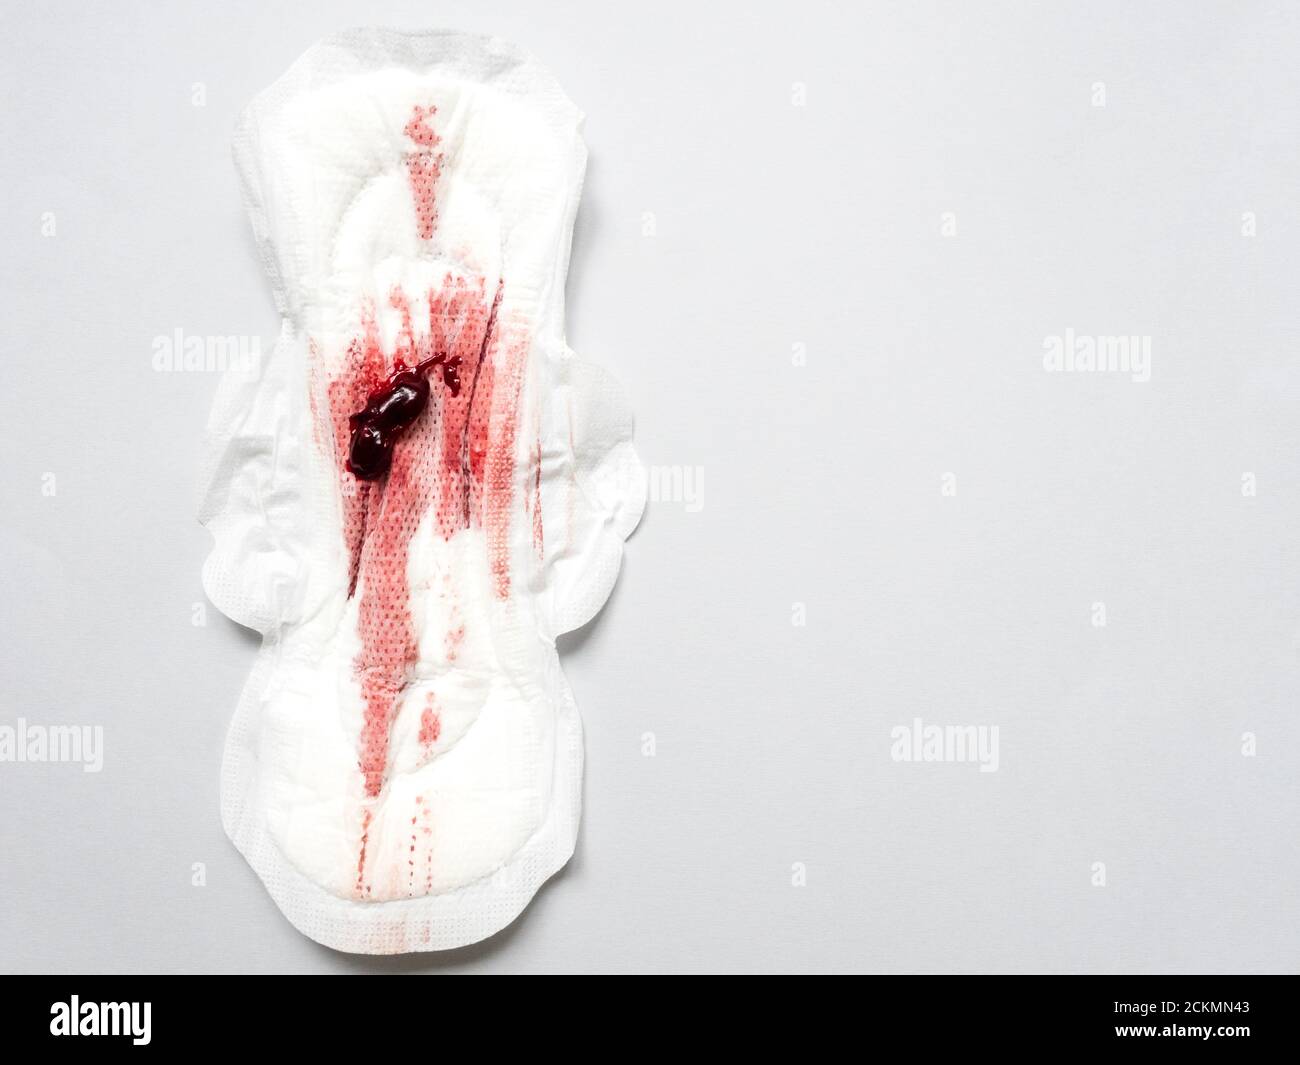 Symptom of endometriosis, menstrual blood with blood clots on a sanitary  pad Stock Photo - Alamy